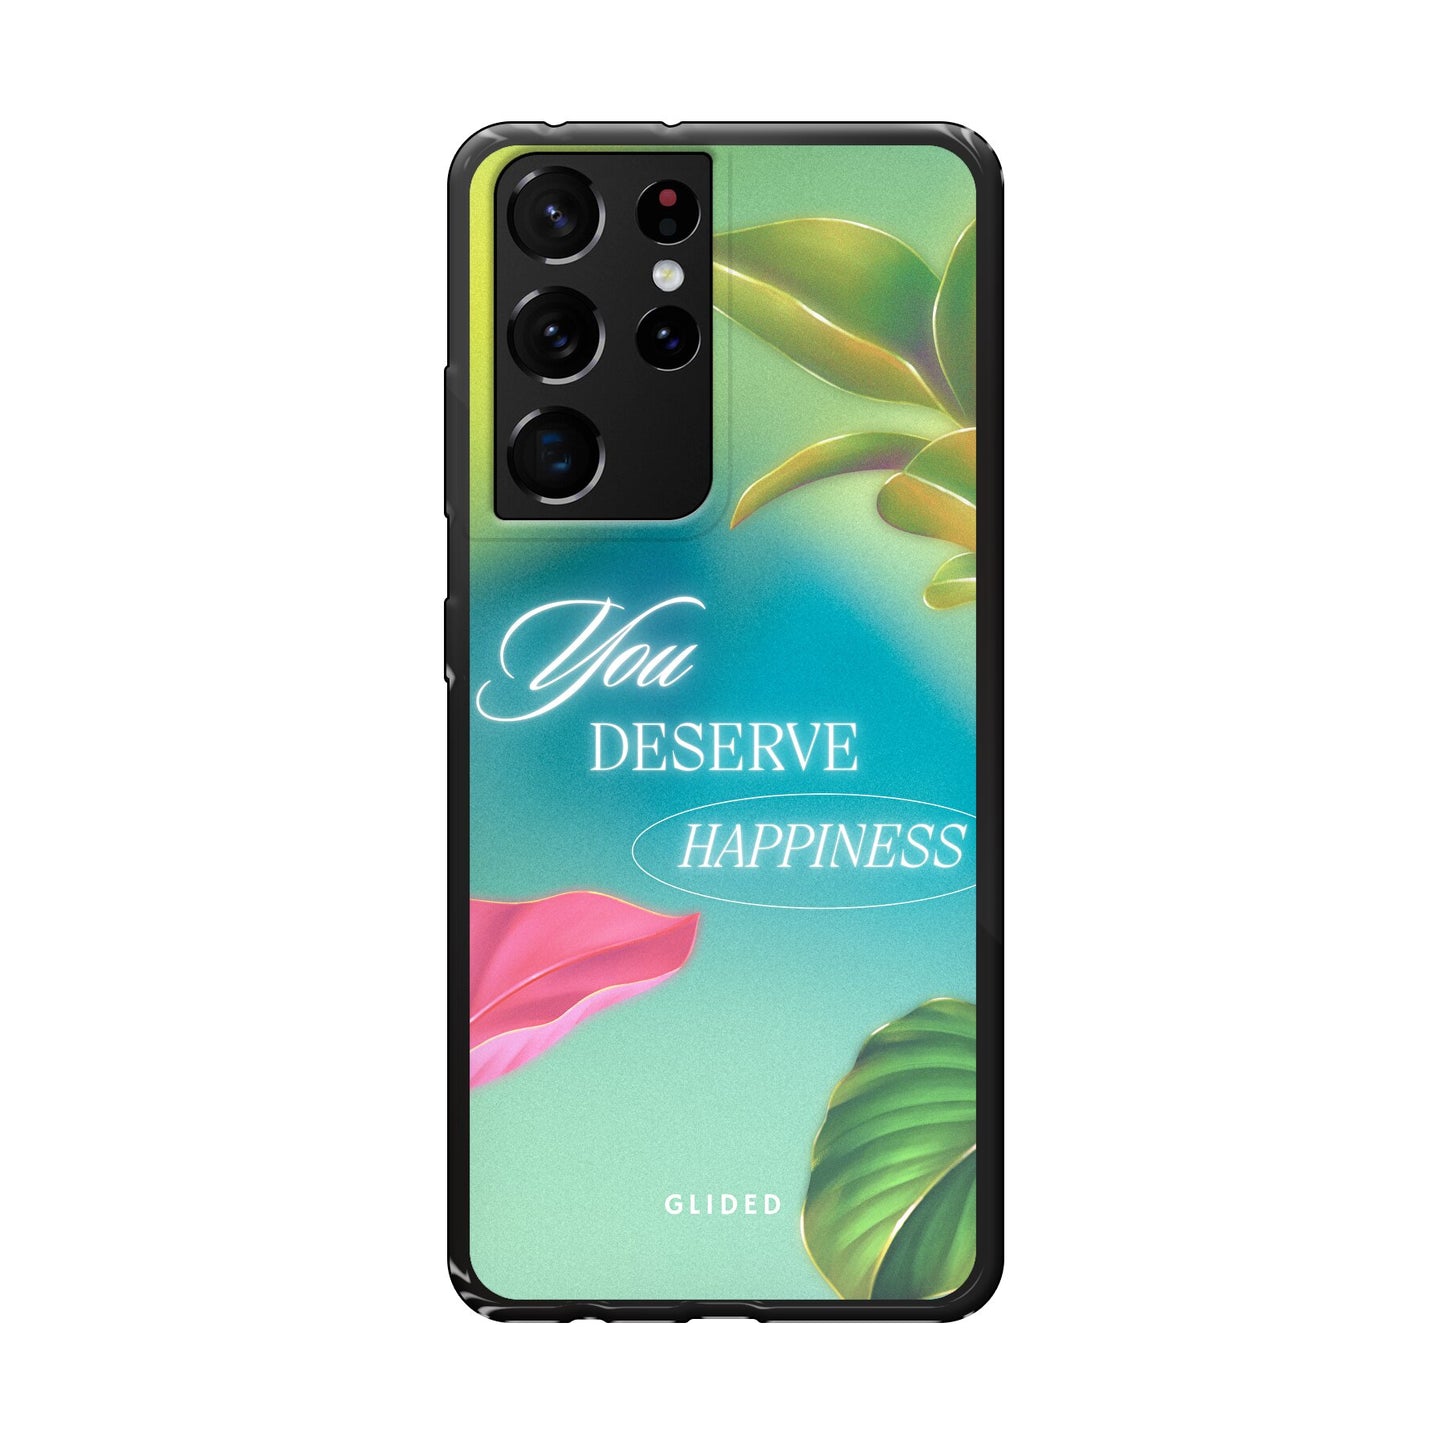 Happiness - Samsung Galaxy S21 Ultra 5G - Soft case